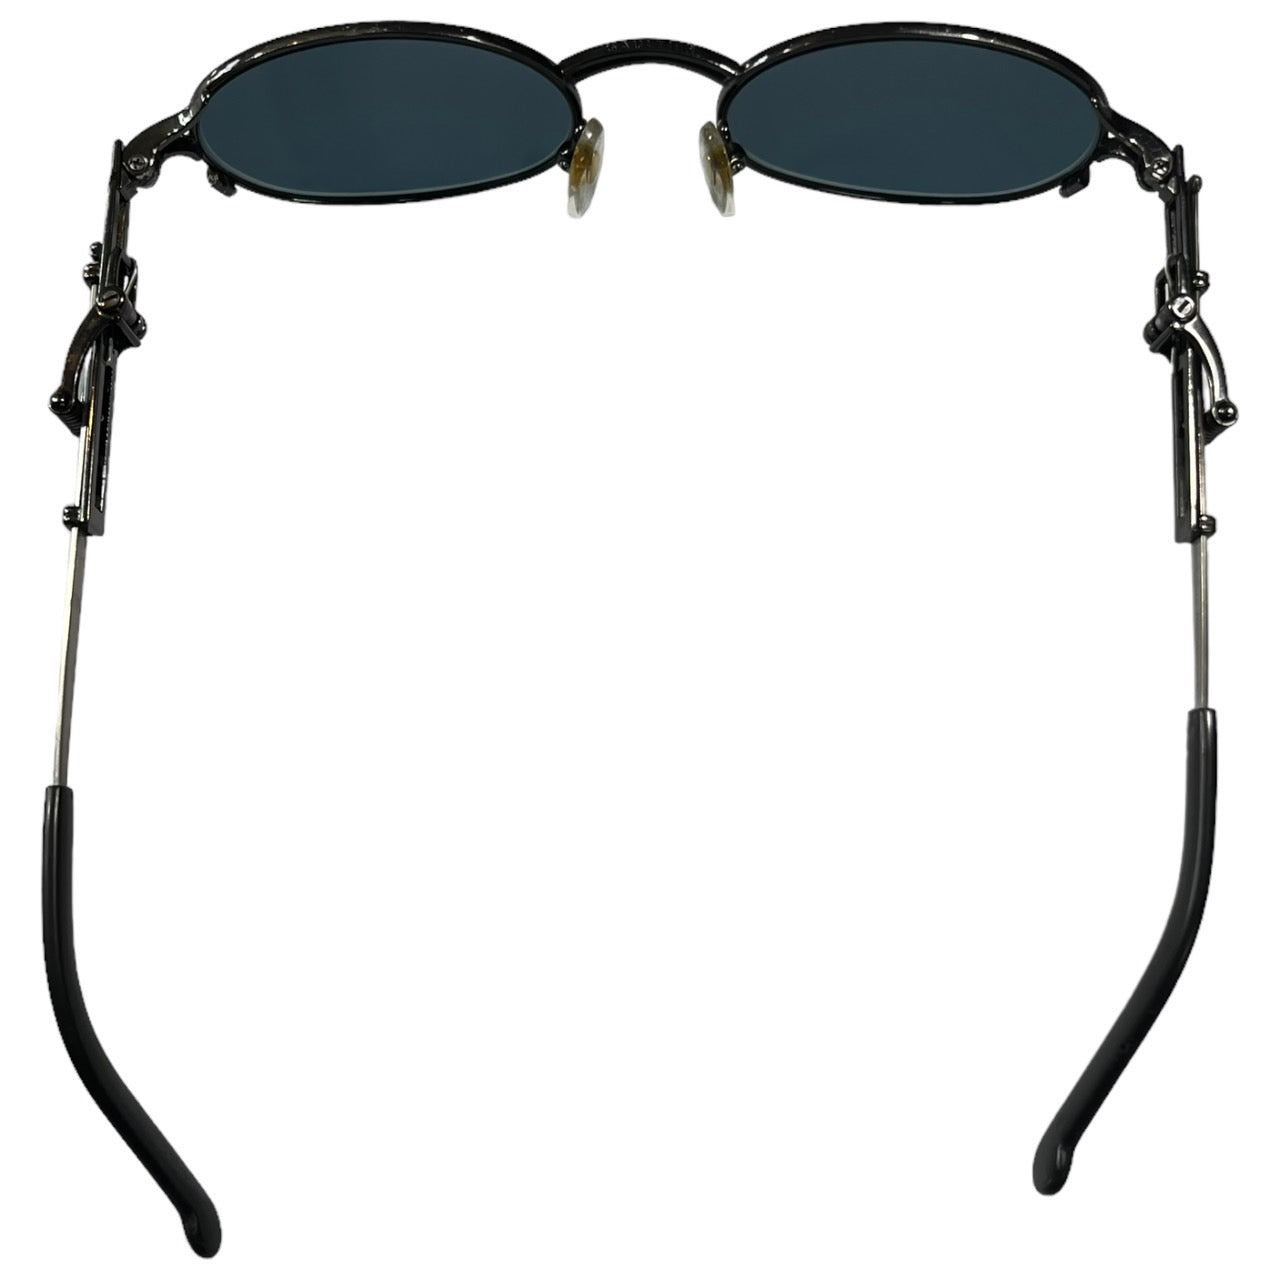 Jean Paul GAULTIER(ジャンポールゴルチエ) 90’s belt temple sunglasses/ベルトテンプルサングラス/メガネ/眼鏡 56-0020 表記無し シルバーフレーム/スモークレンズ